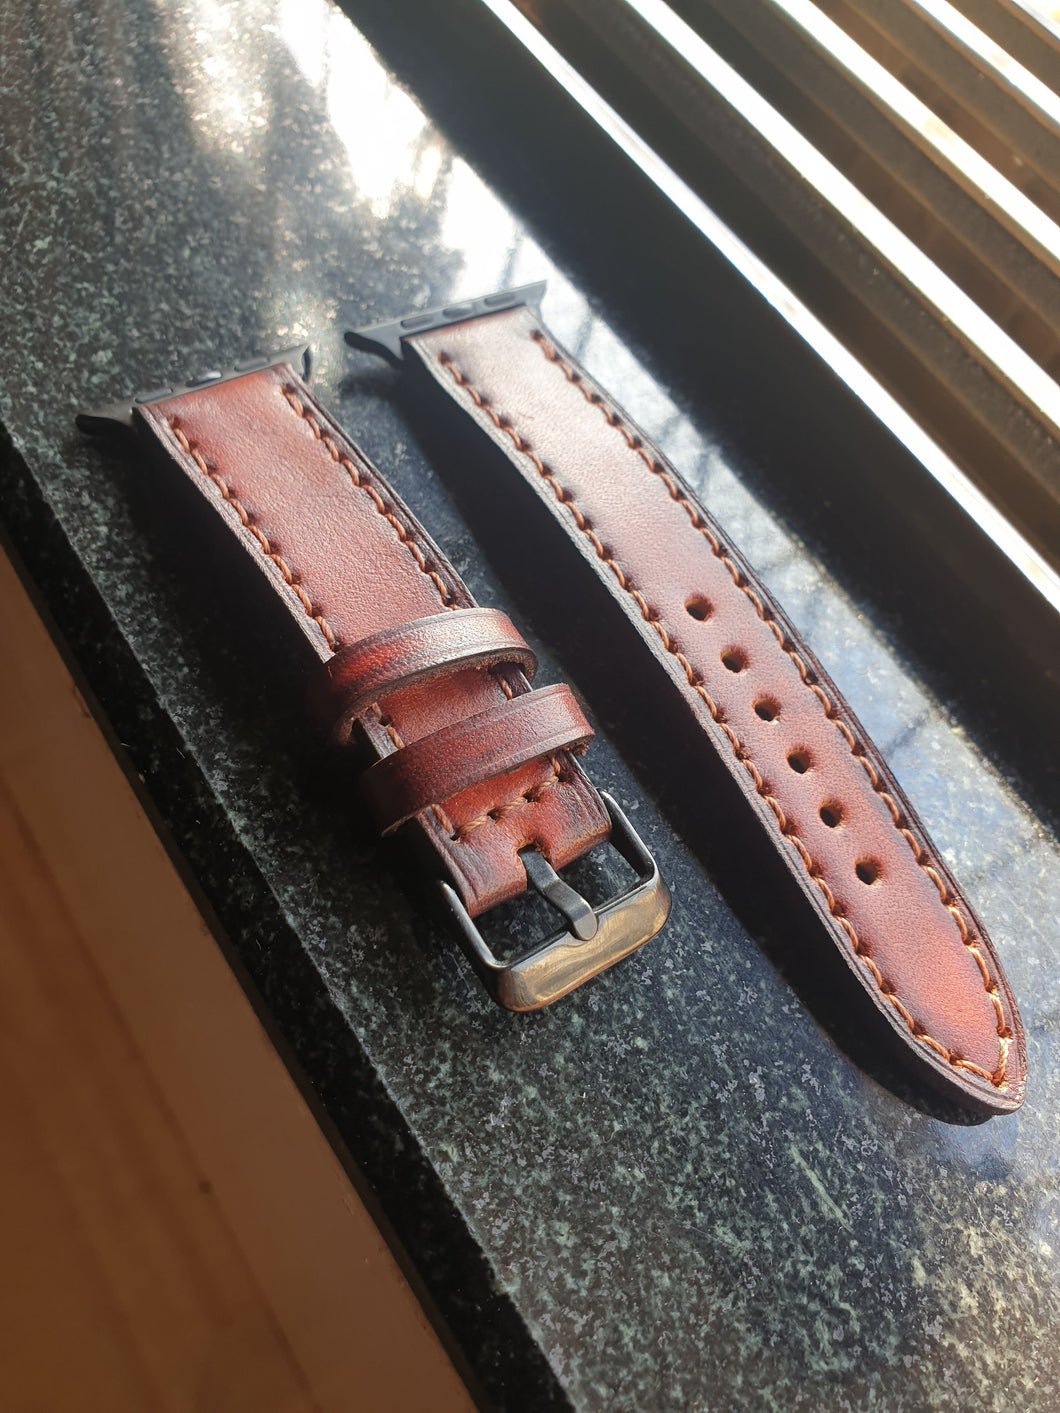 Indianleathercraft Series 3 - 42mm Fullgrain leather apple watch strap